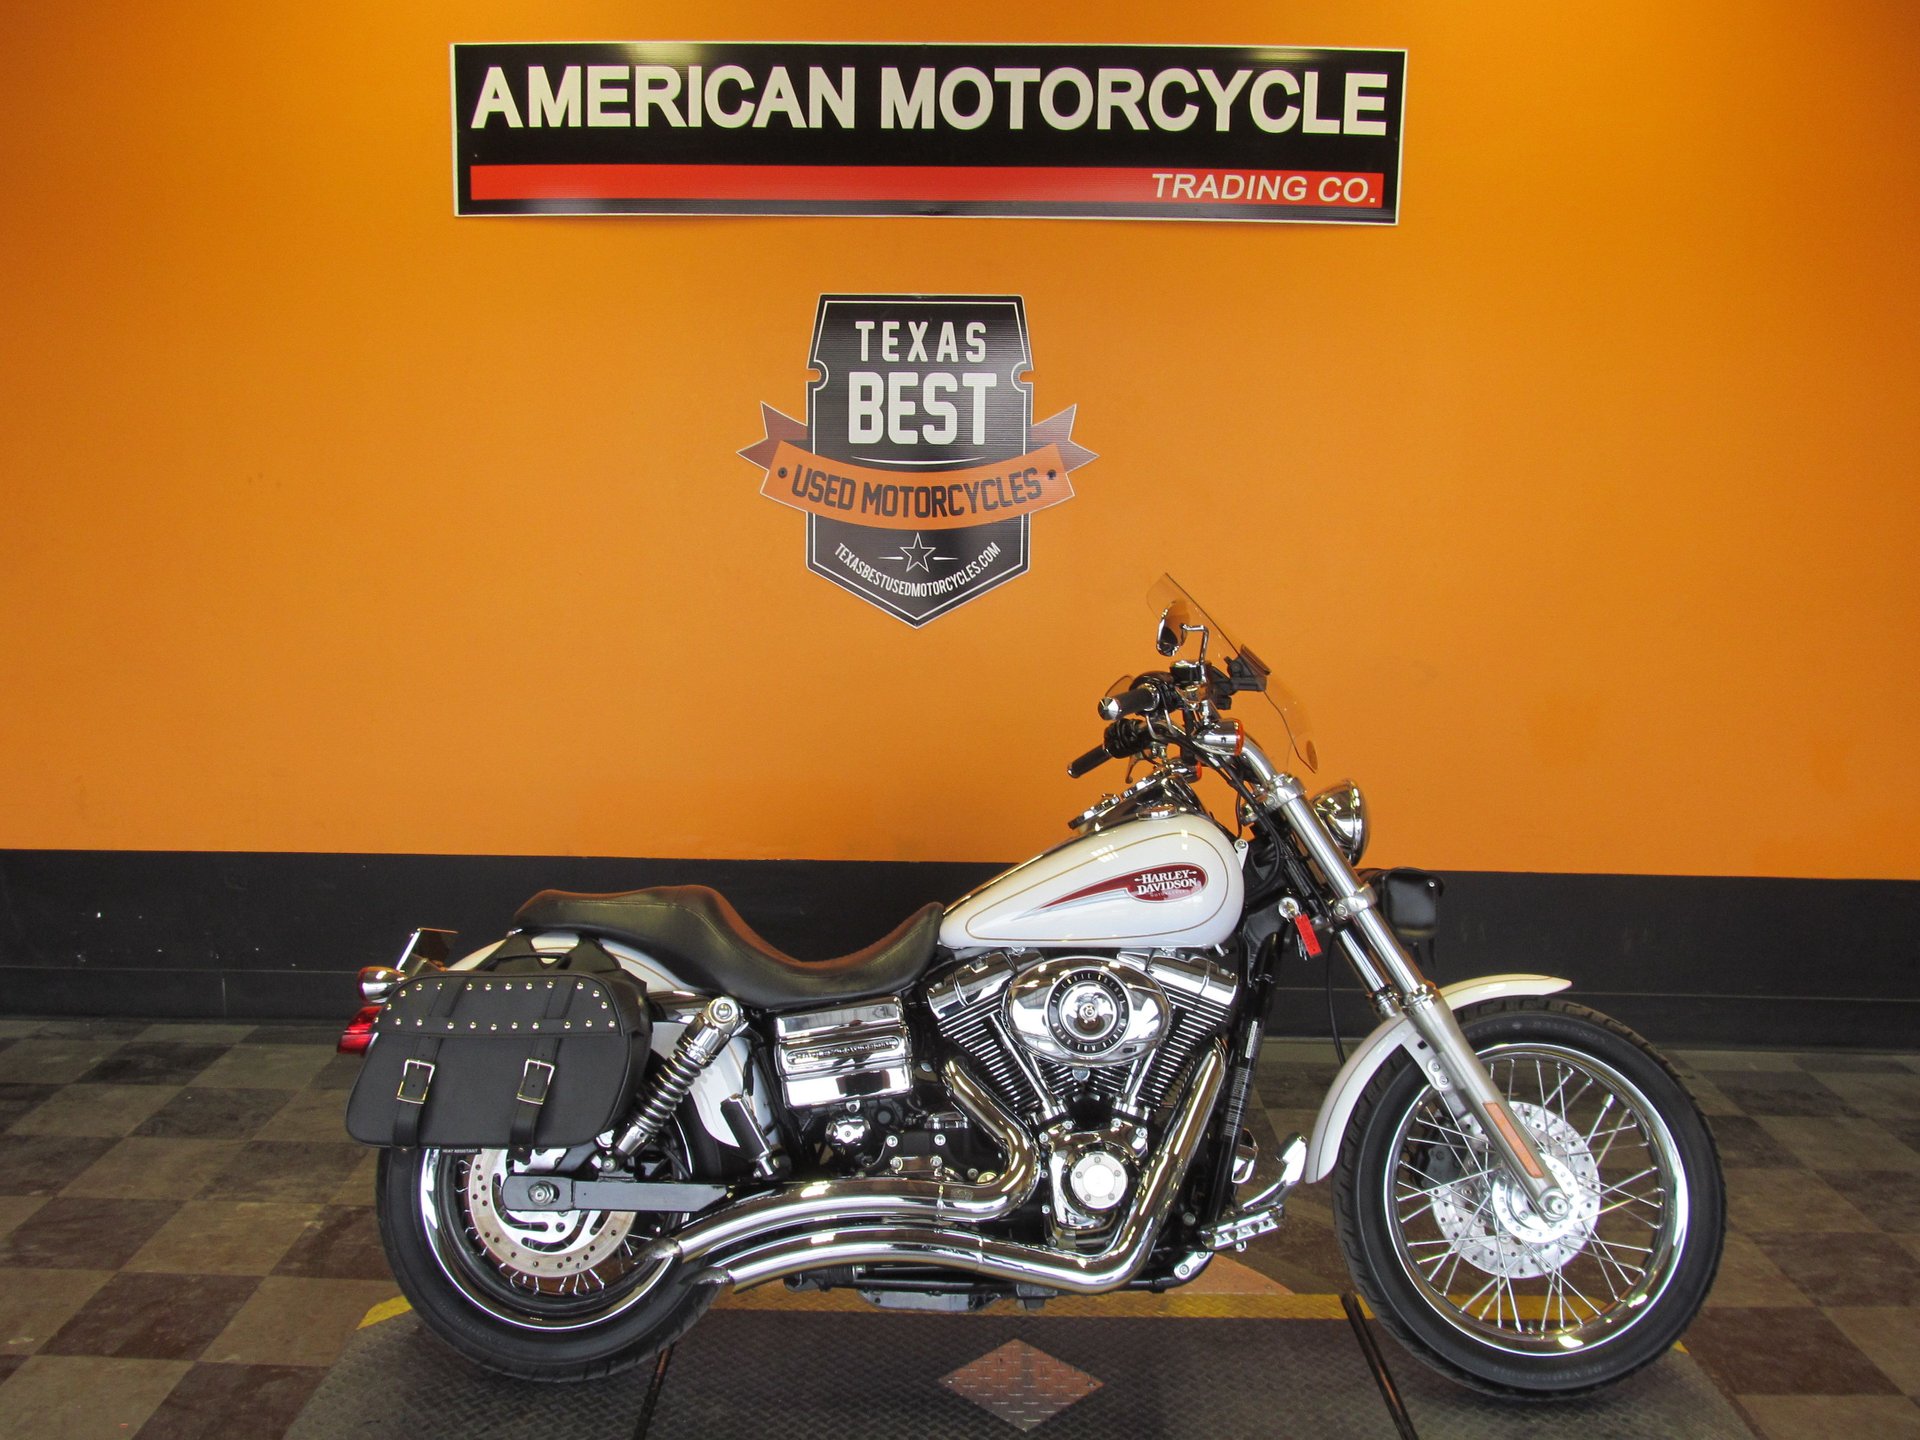 2007 Harley Davidson Dyna Low Rider American Motorcycle Trading Company Used Harley Davidson Motorcycles